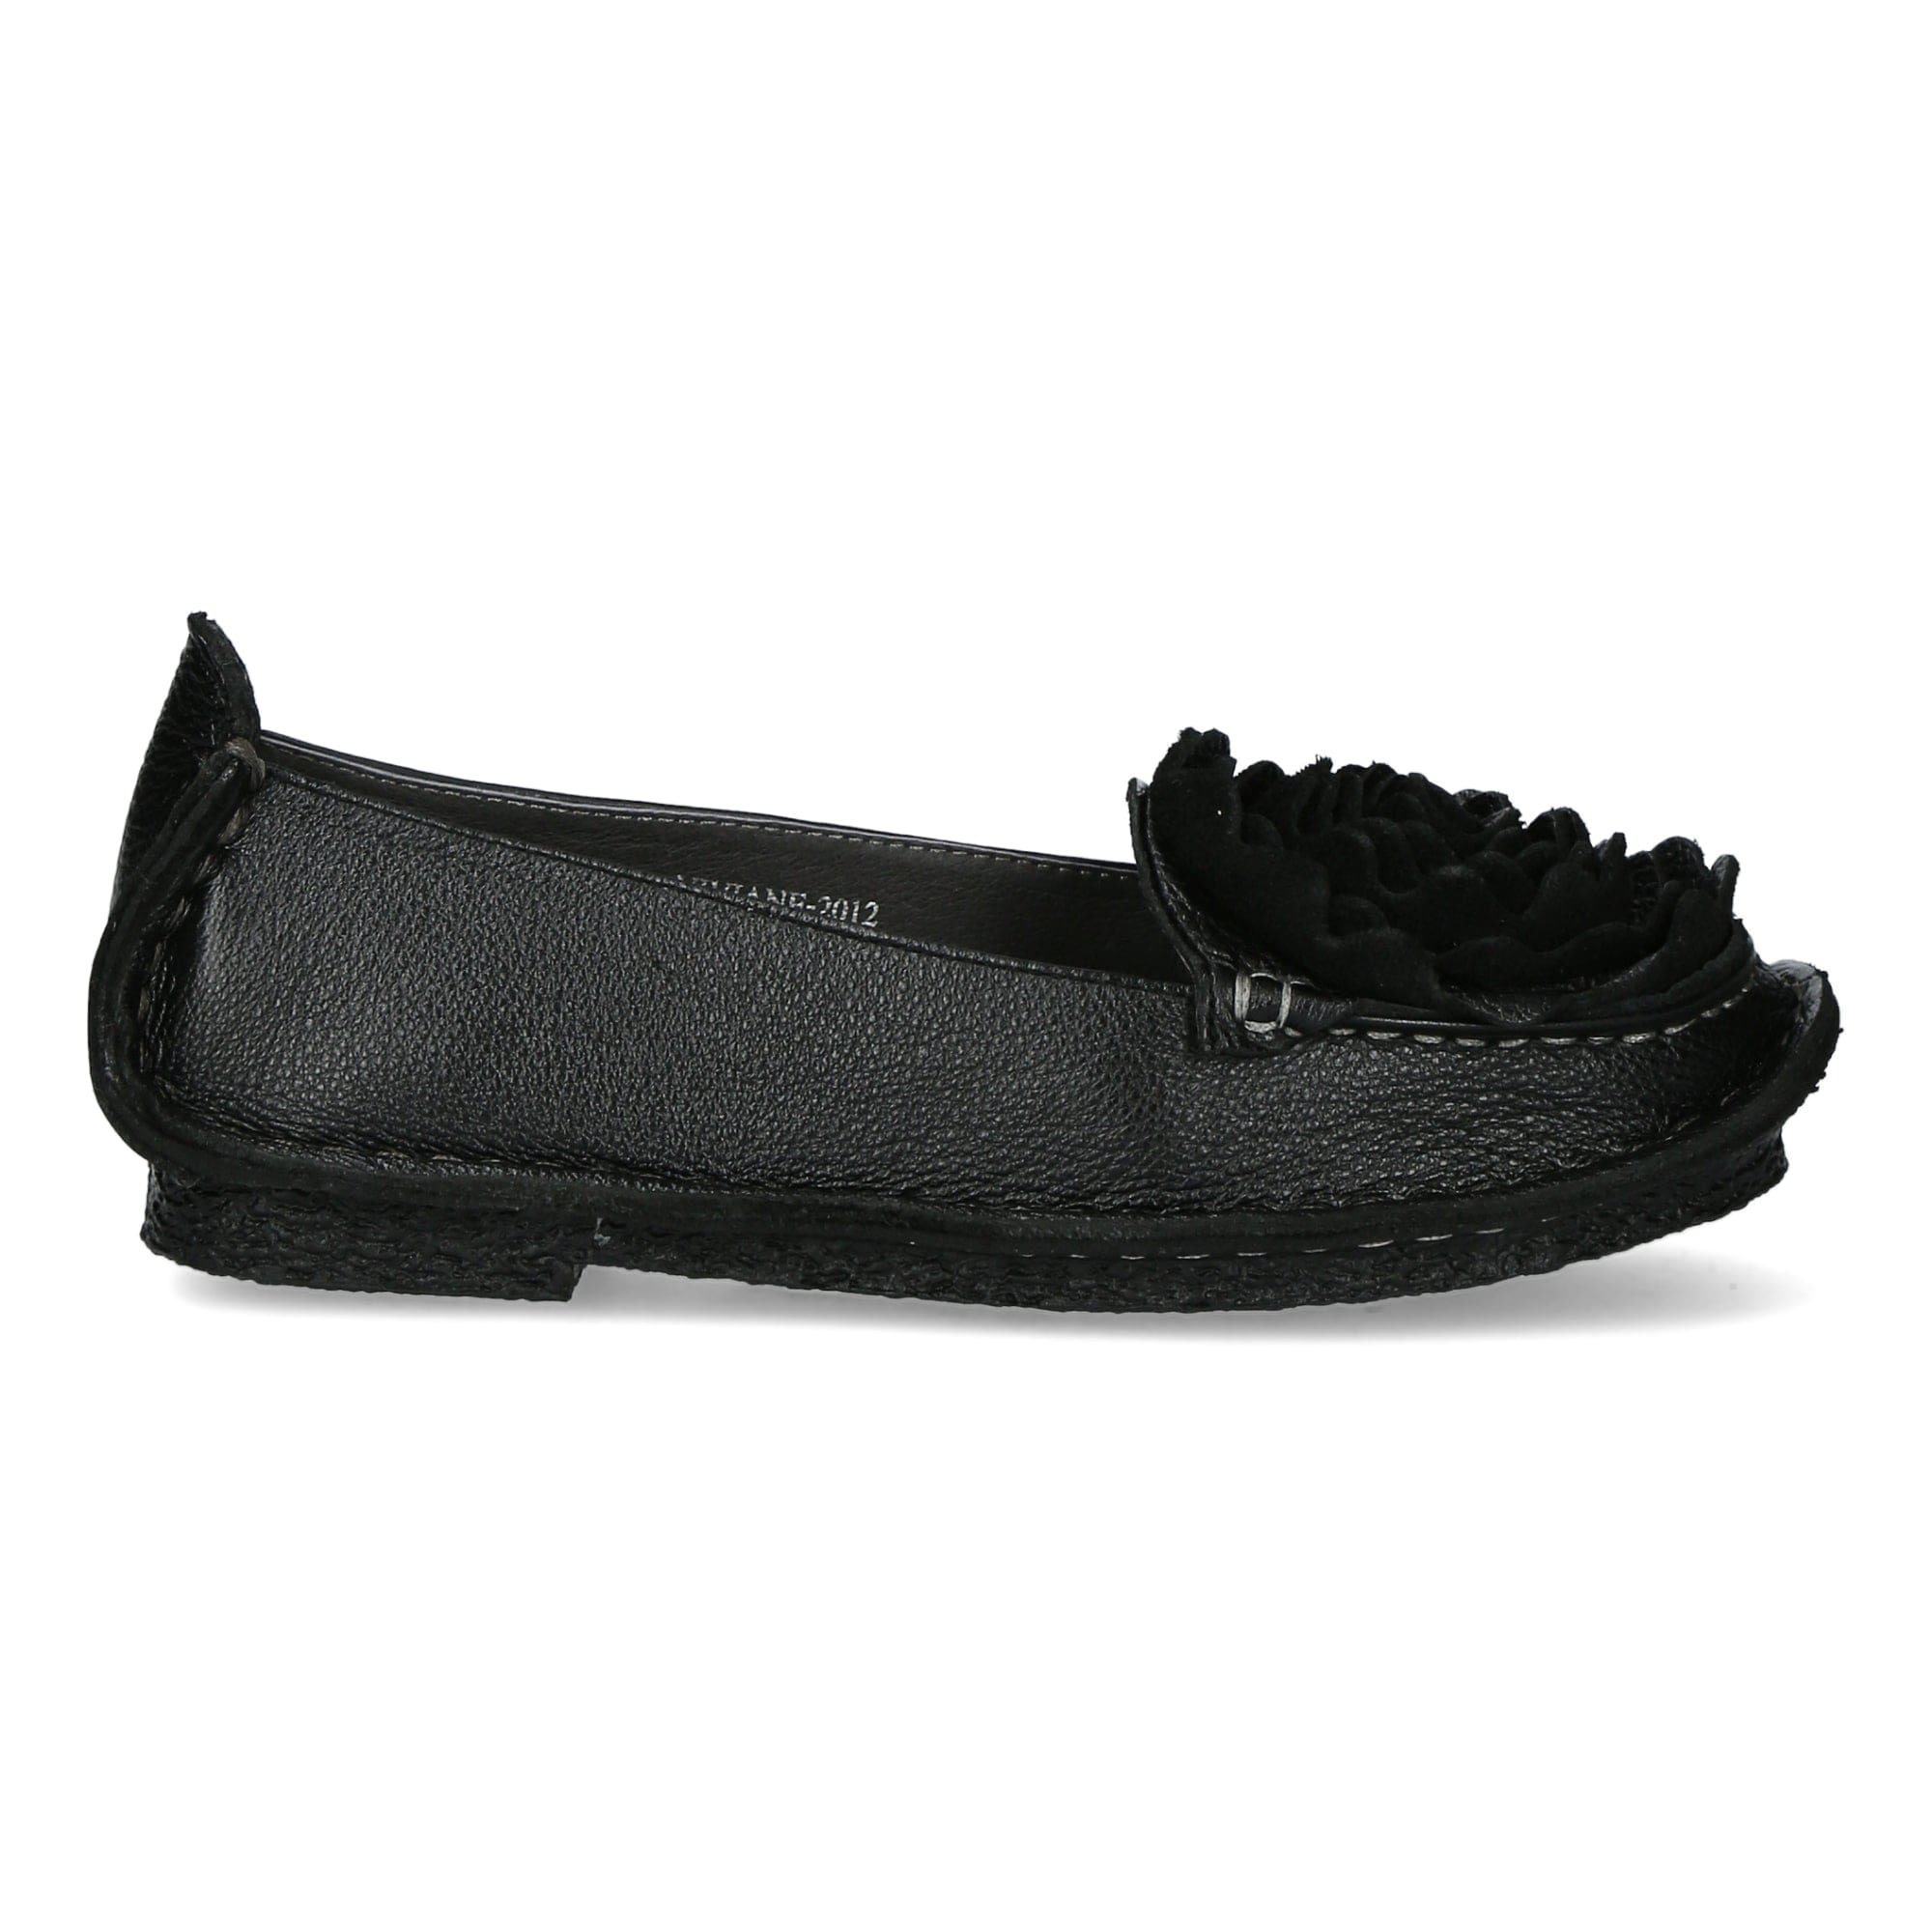 Zapatos Viviane - 35 / Negro - Mocasín